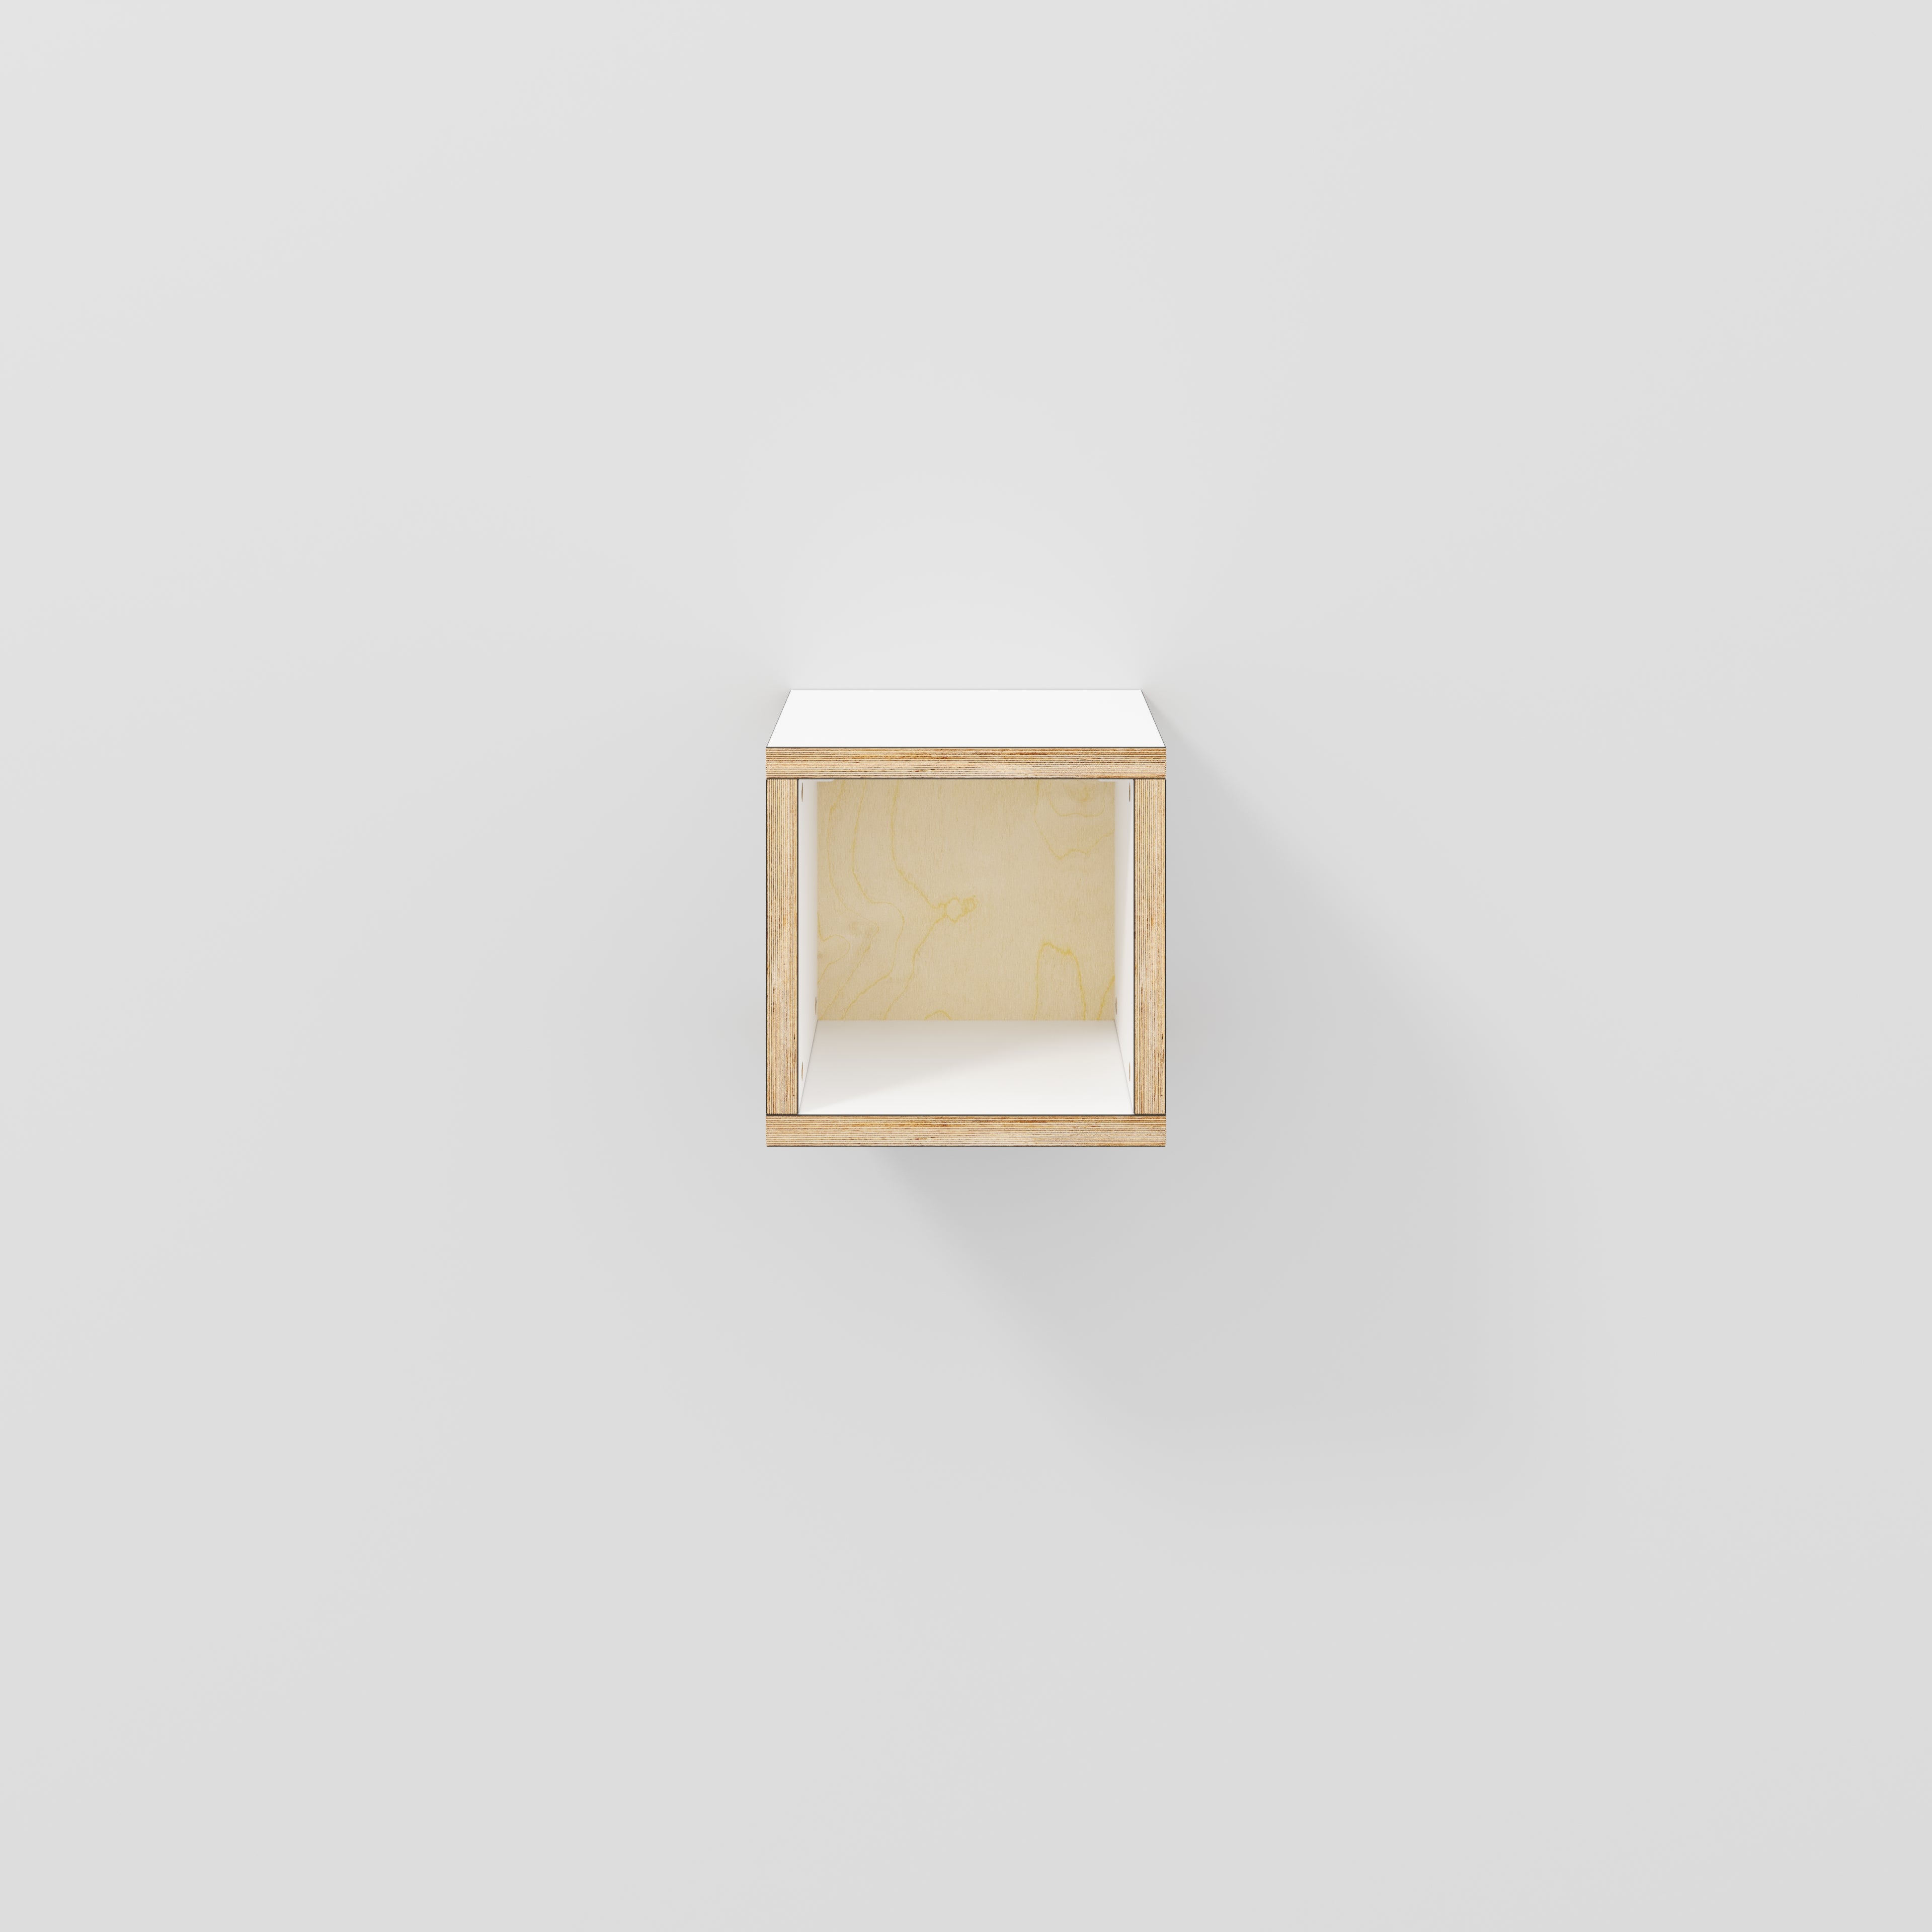 Wall Hung Box Storage - Formica White - 300(w) x 300(d) x 300(h)